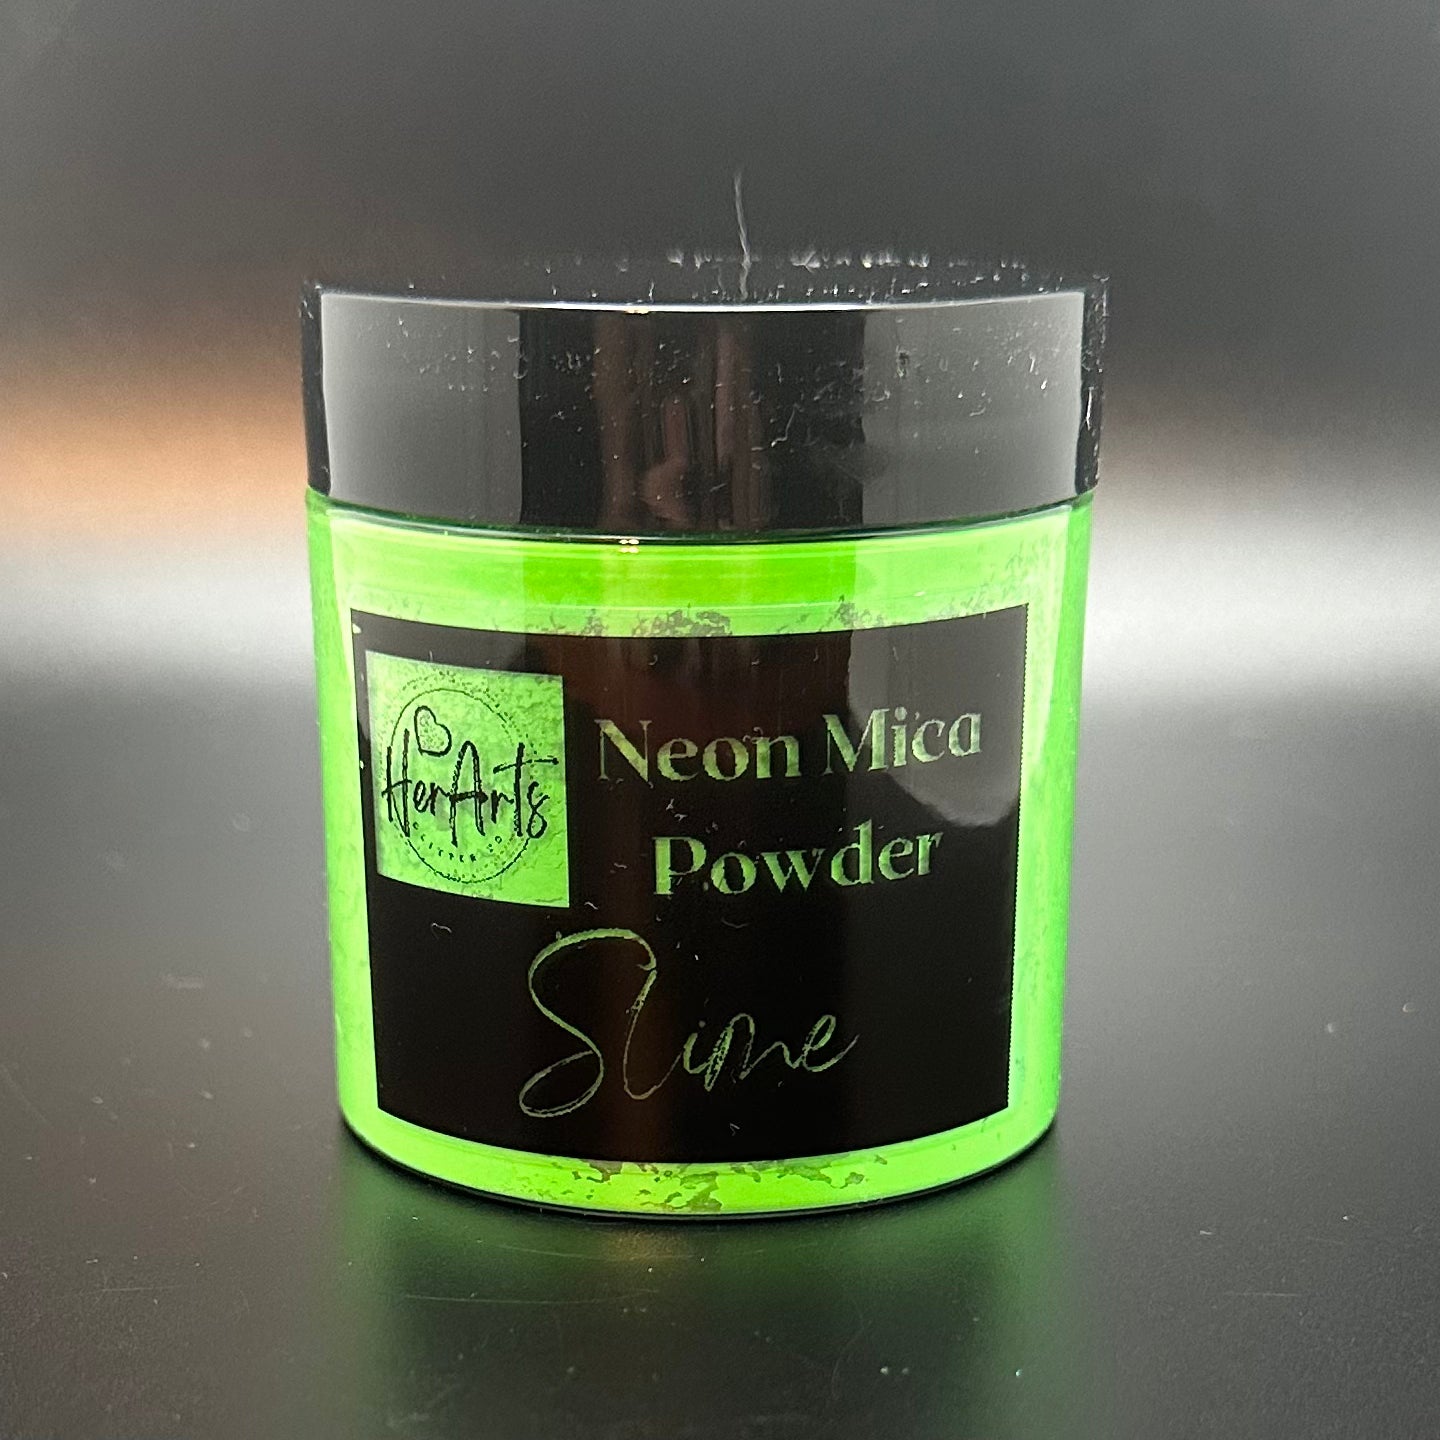 Neon Mica Powder, Slime